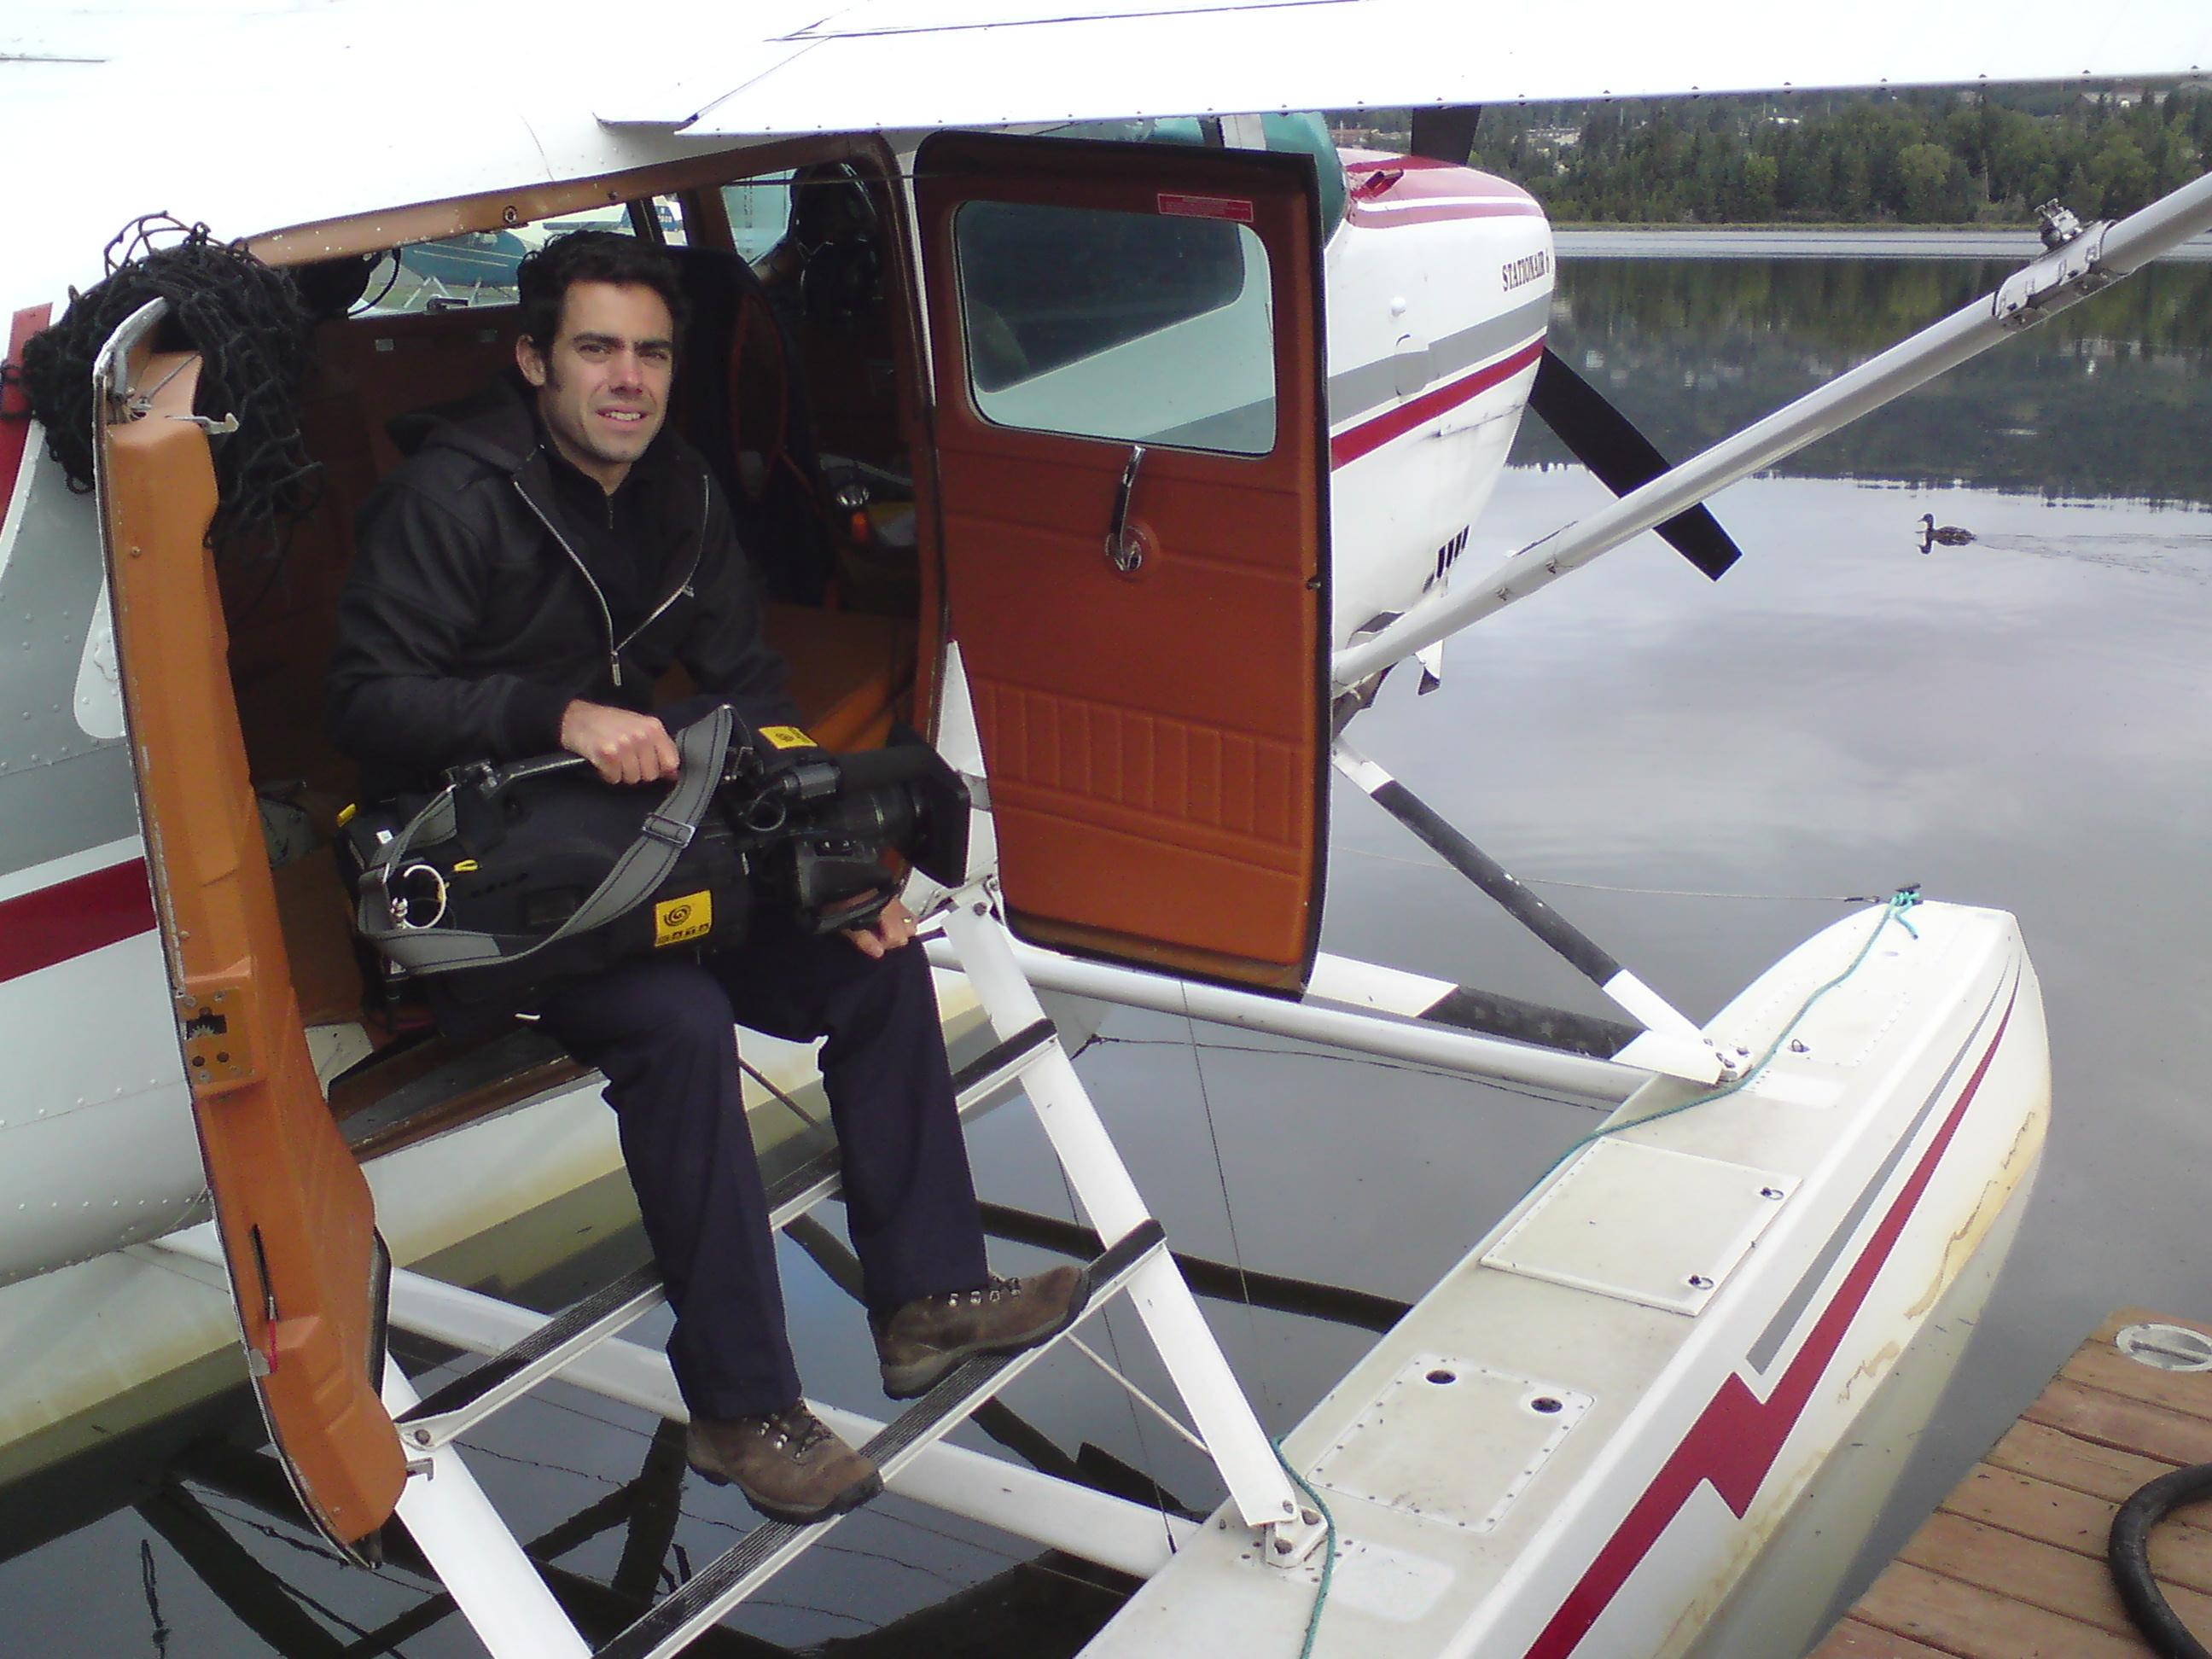 working as a cameraman in alaska